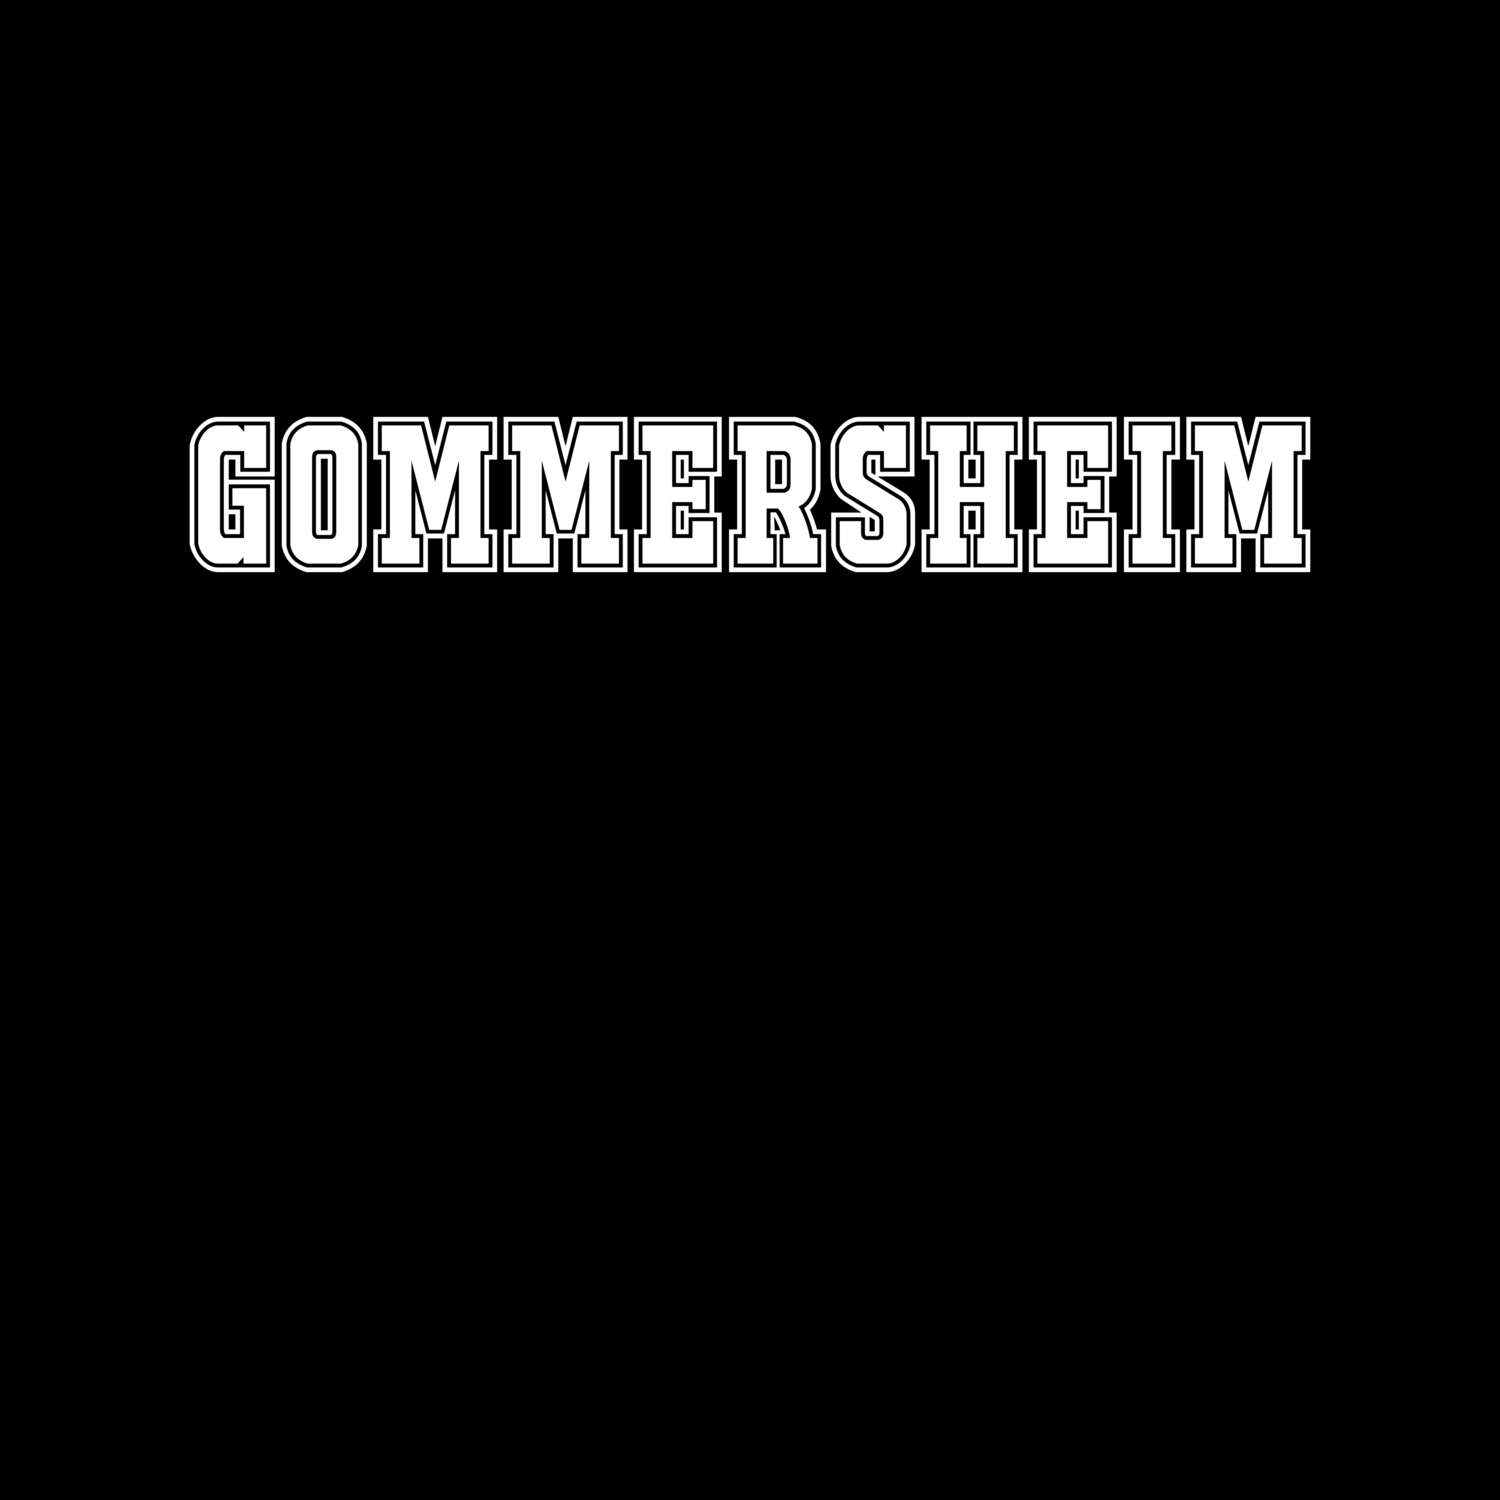 Gommersheim T-Shirt »Classic«